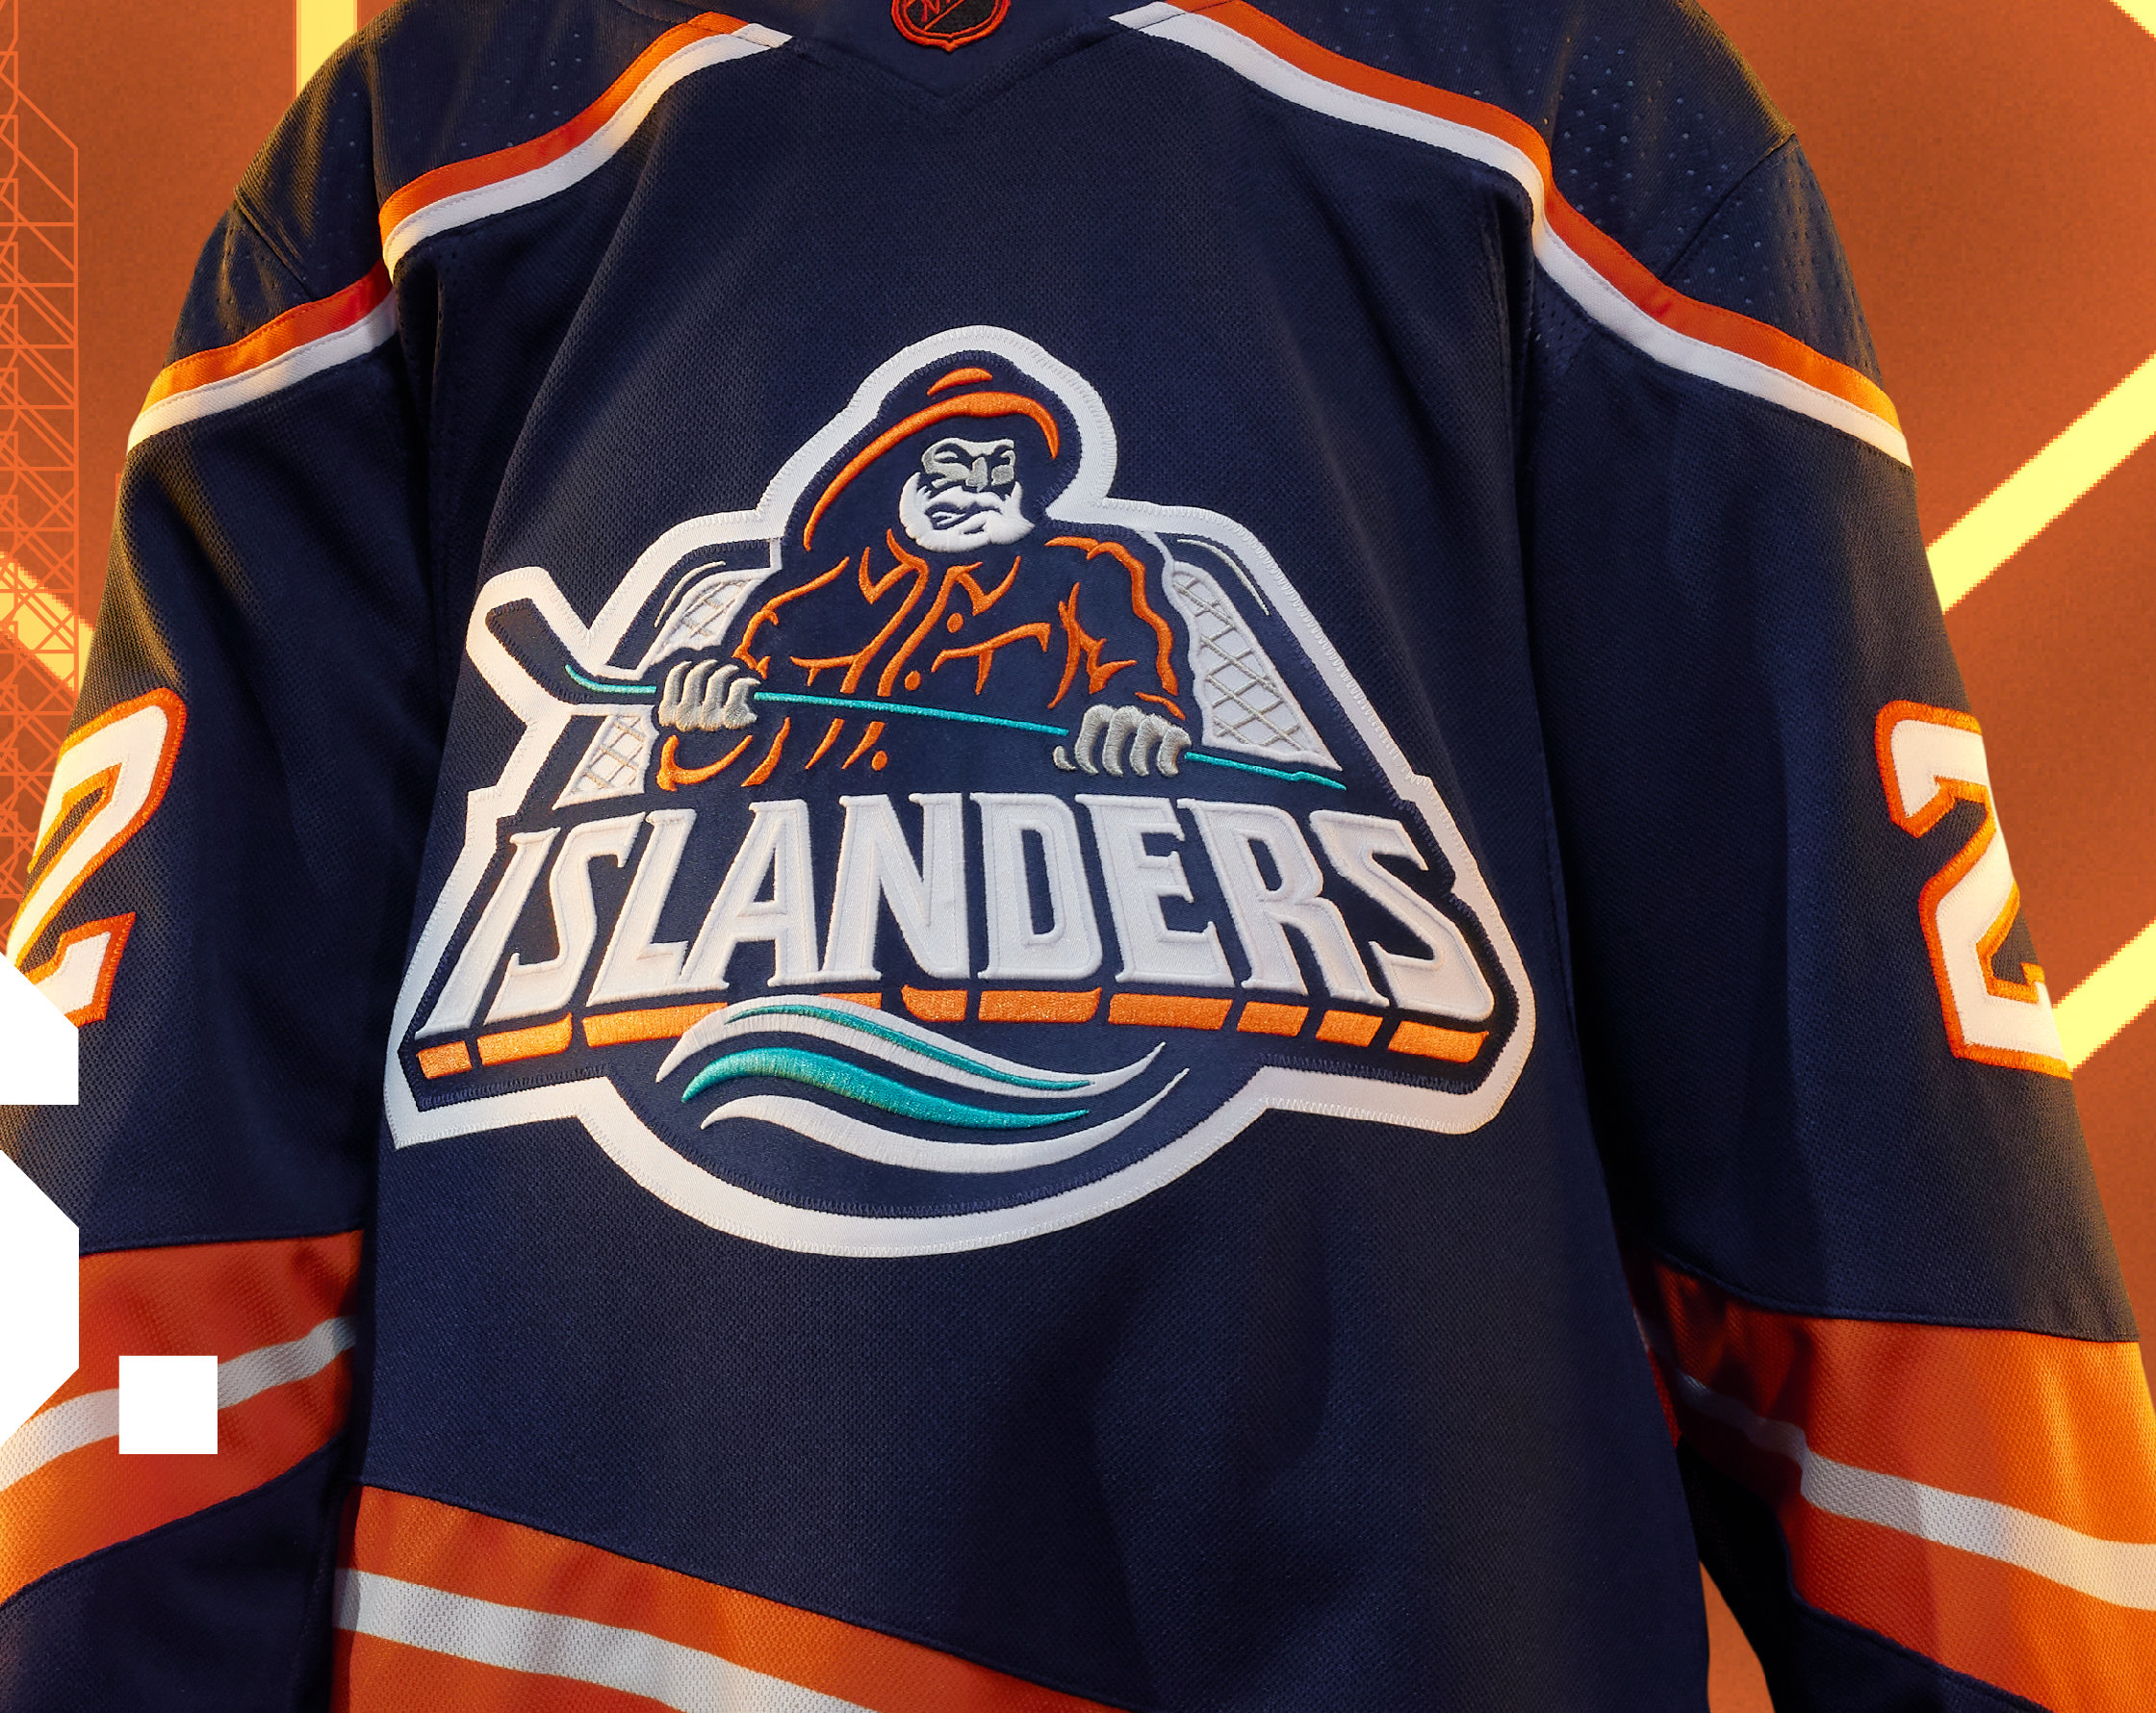 Shield your eyes: Islanders' infamous 'fishsticks' jersey is back